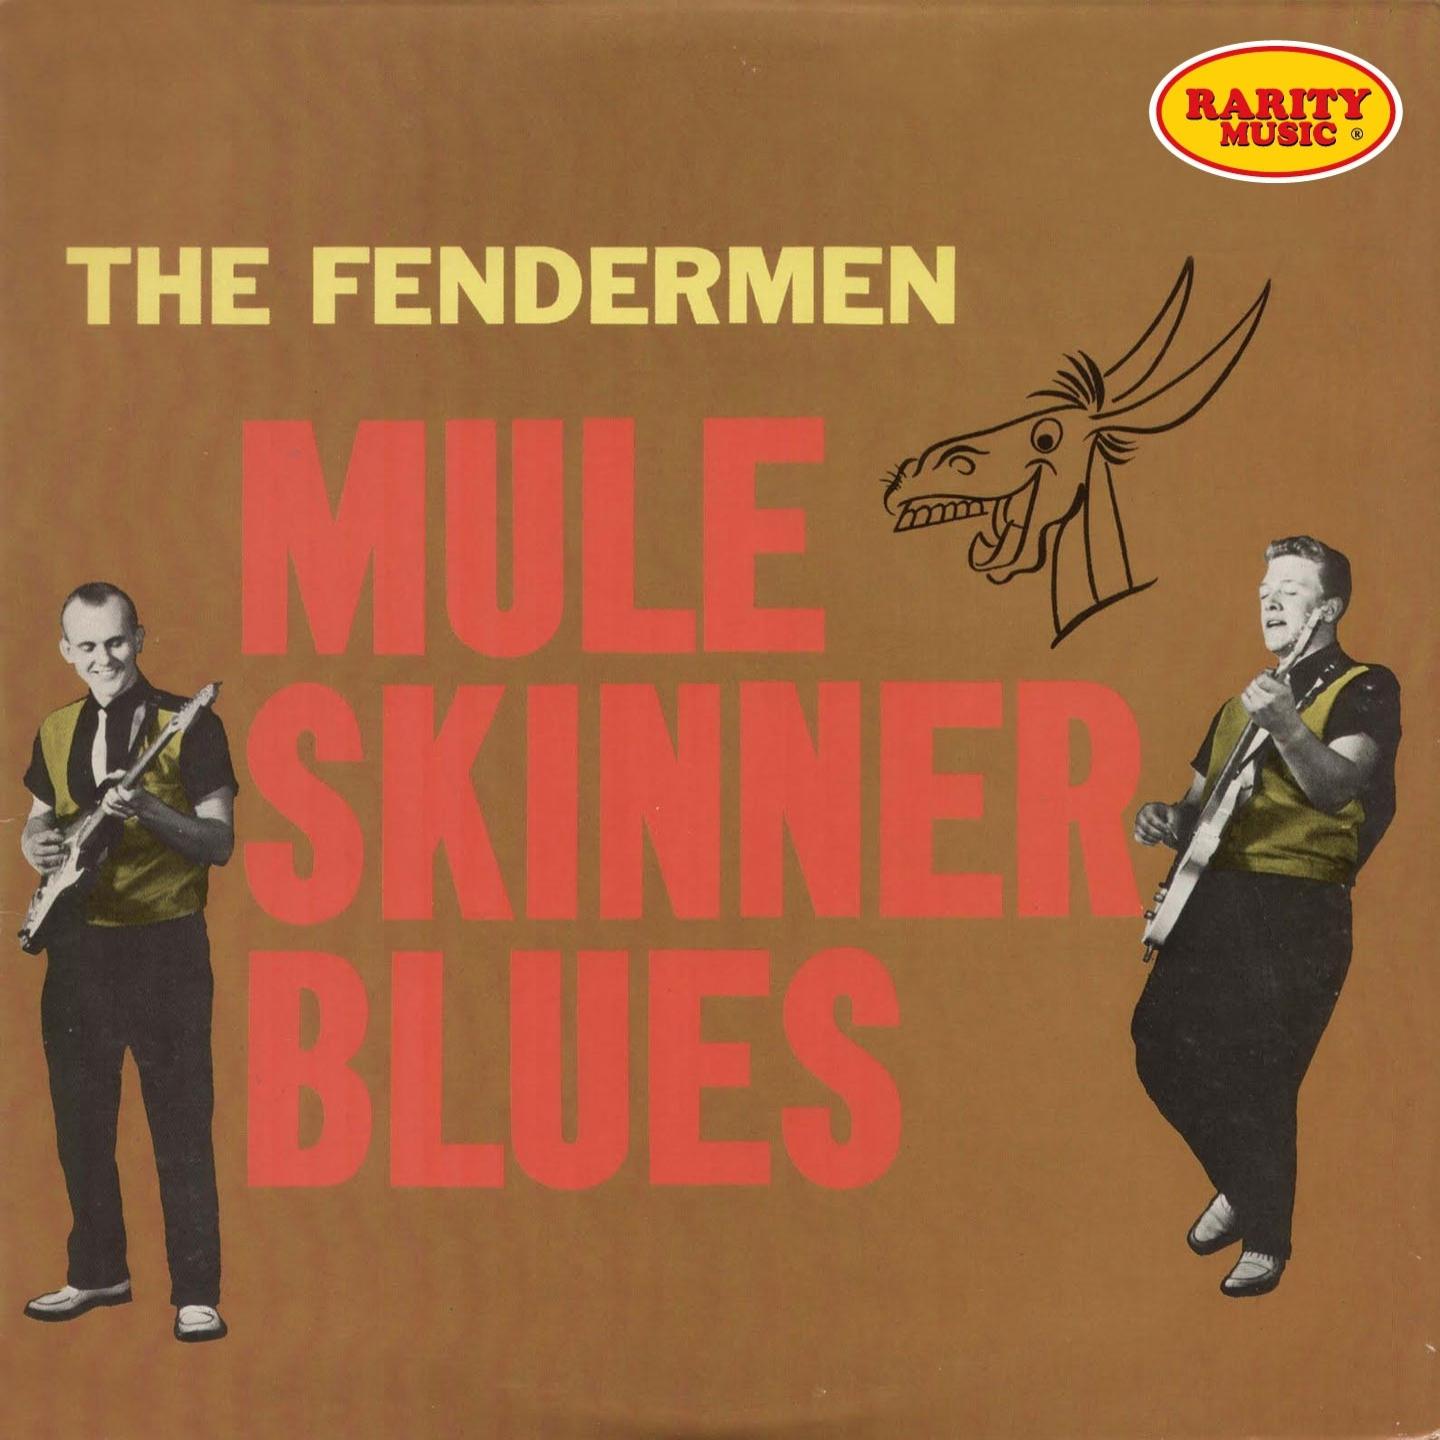 Mule Skinner Blues: Rarity Music Pop, Vol. 183